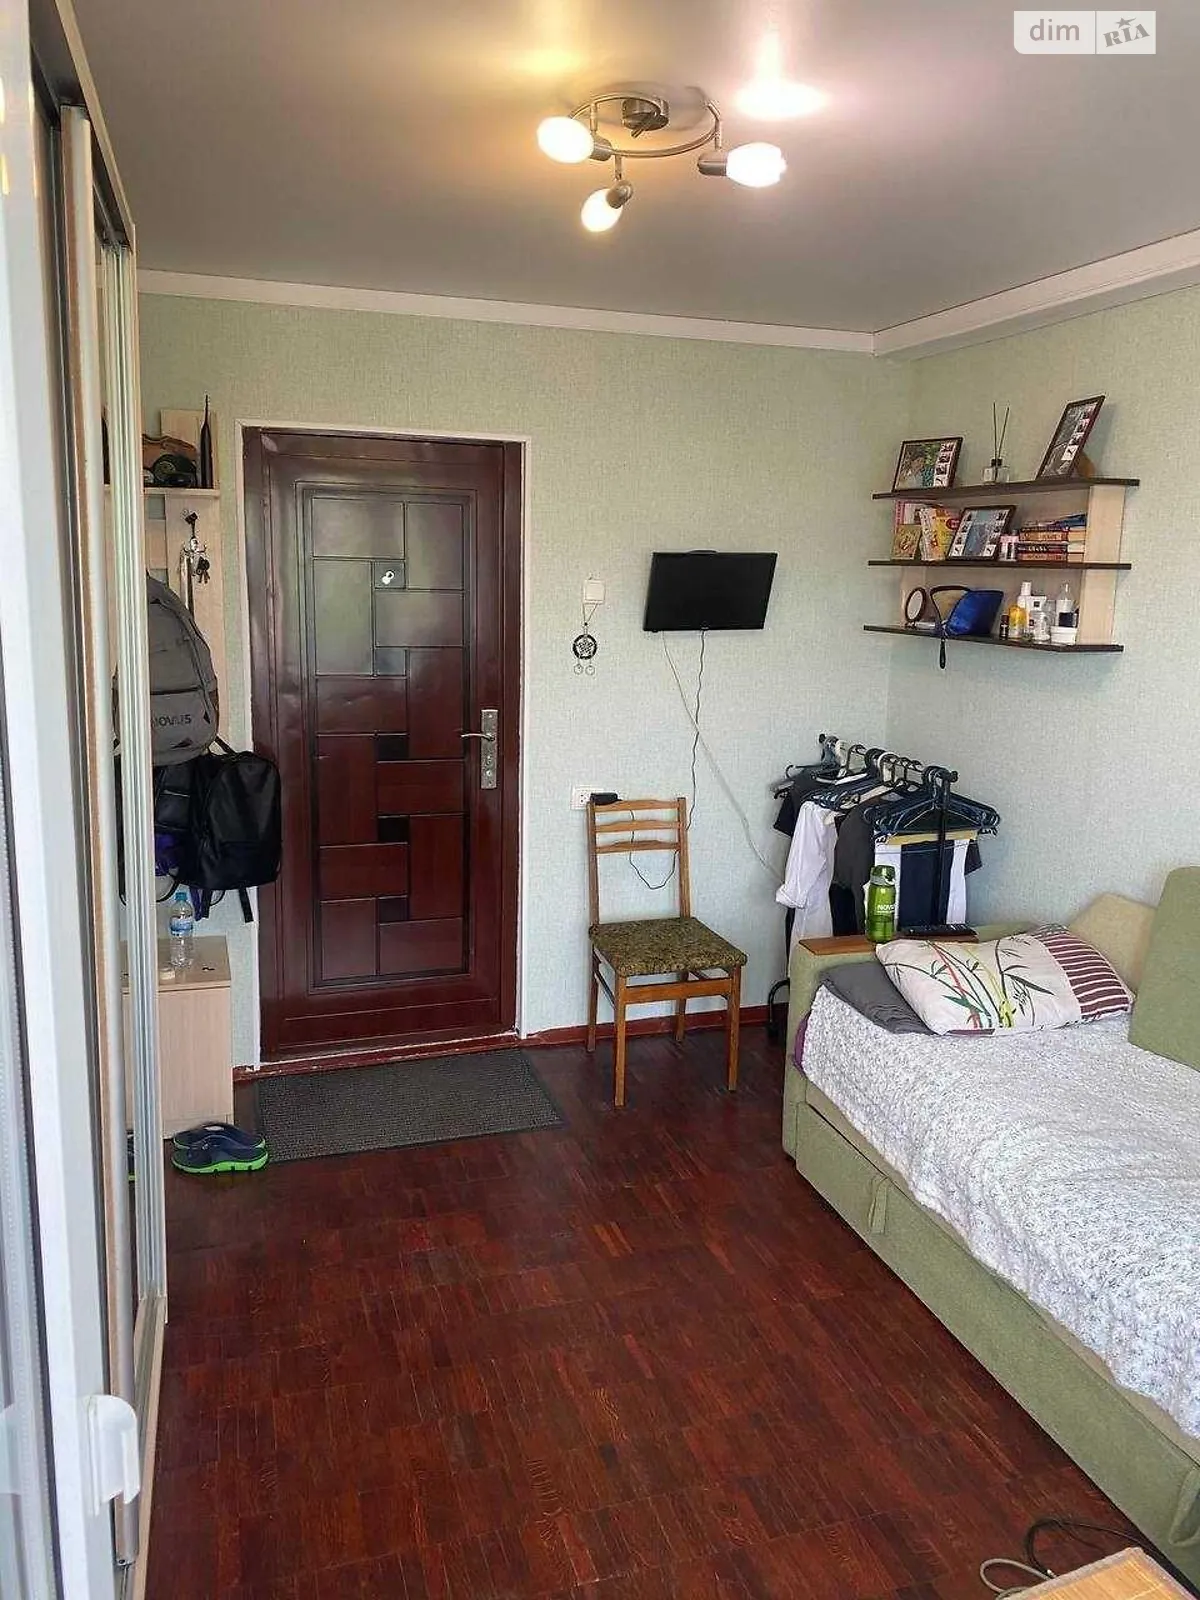 Продается комната 24 кв. м в Киеве, цена: 14500 $ - фото 1